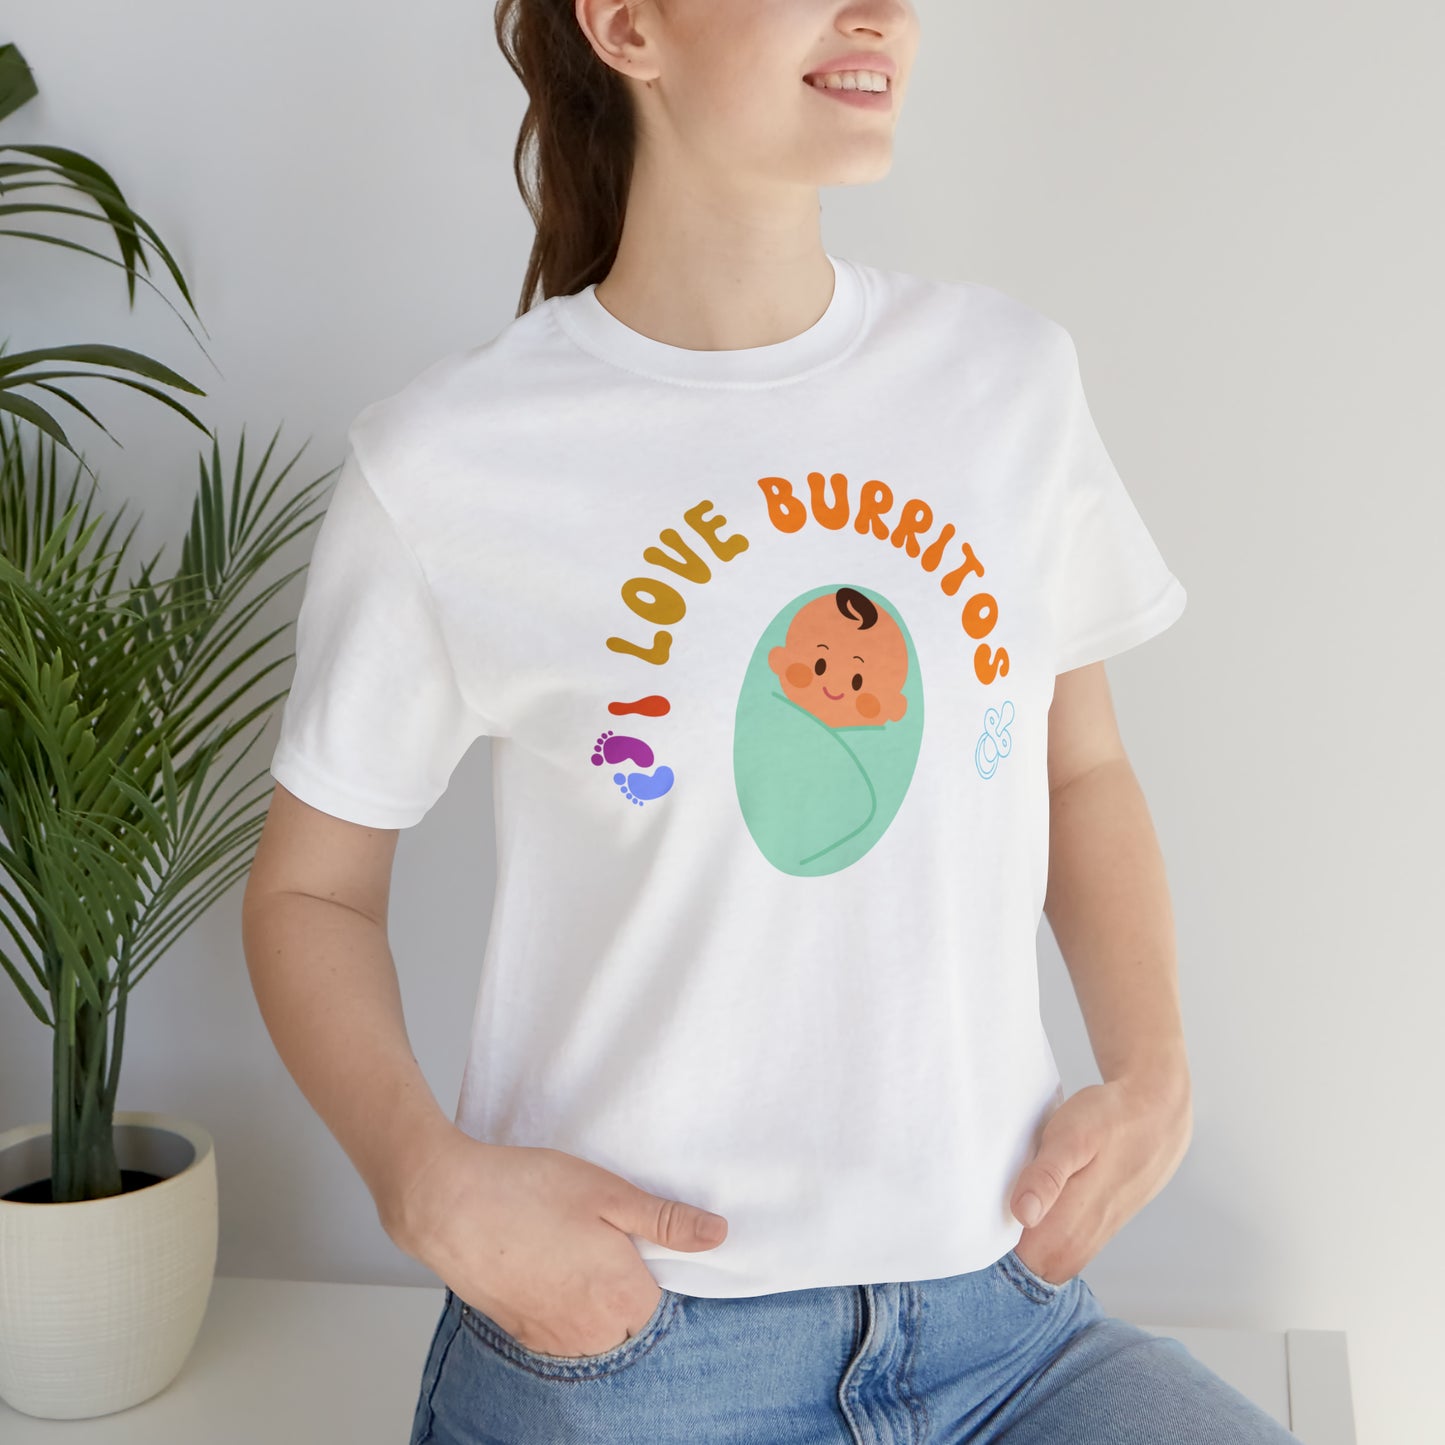 Cute Midwife Shirt, I Love Burritos Shirt, Midwifery Shirt, Labor and Delivery Nurse Shirt, Funny NICU Nurse Shirt, T350